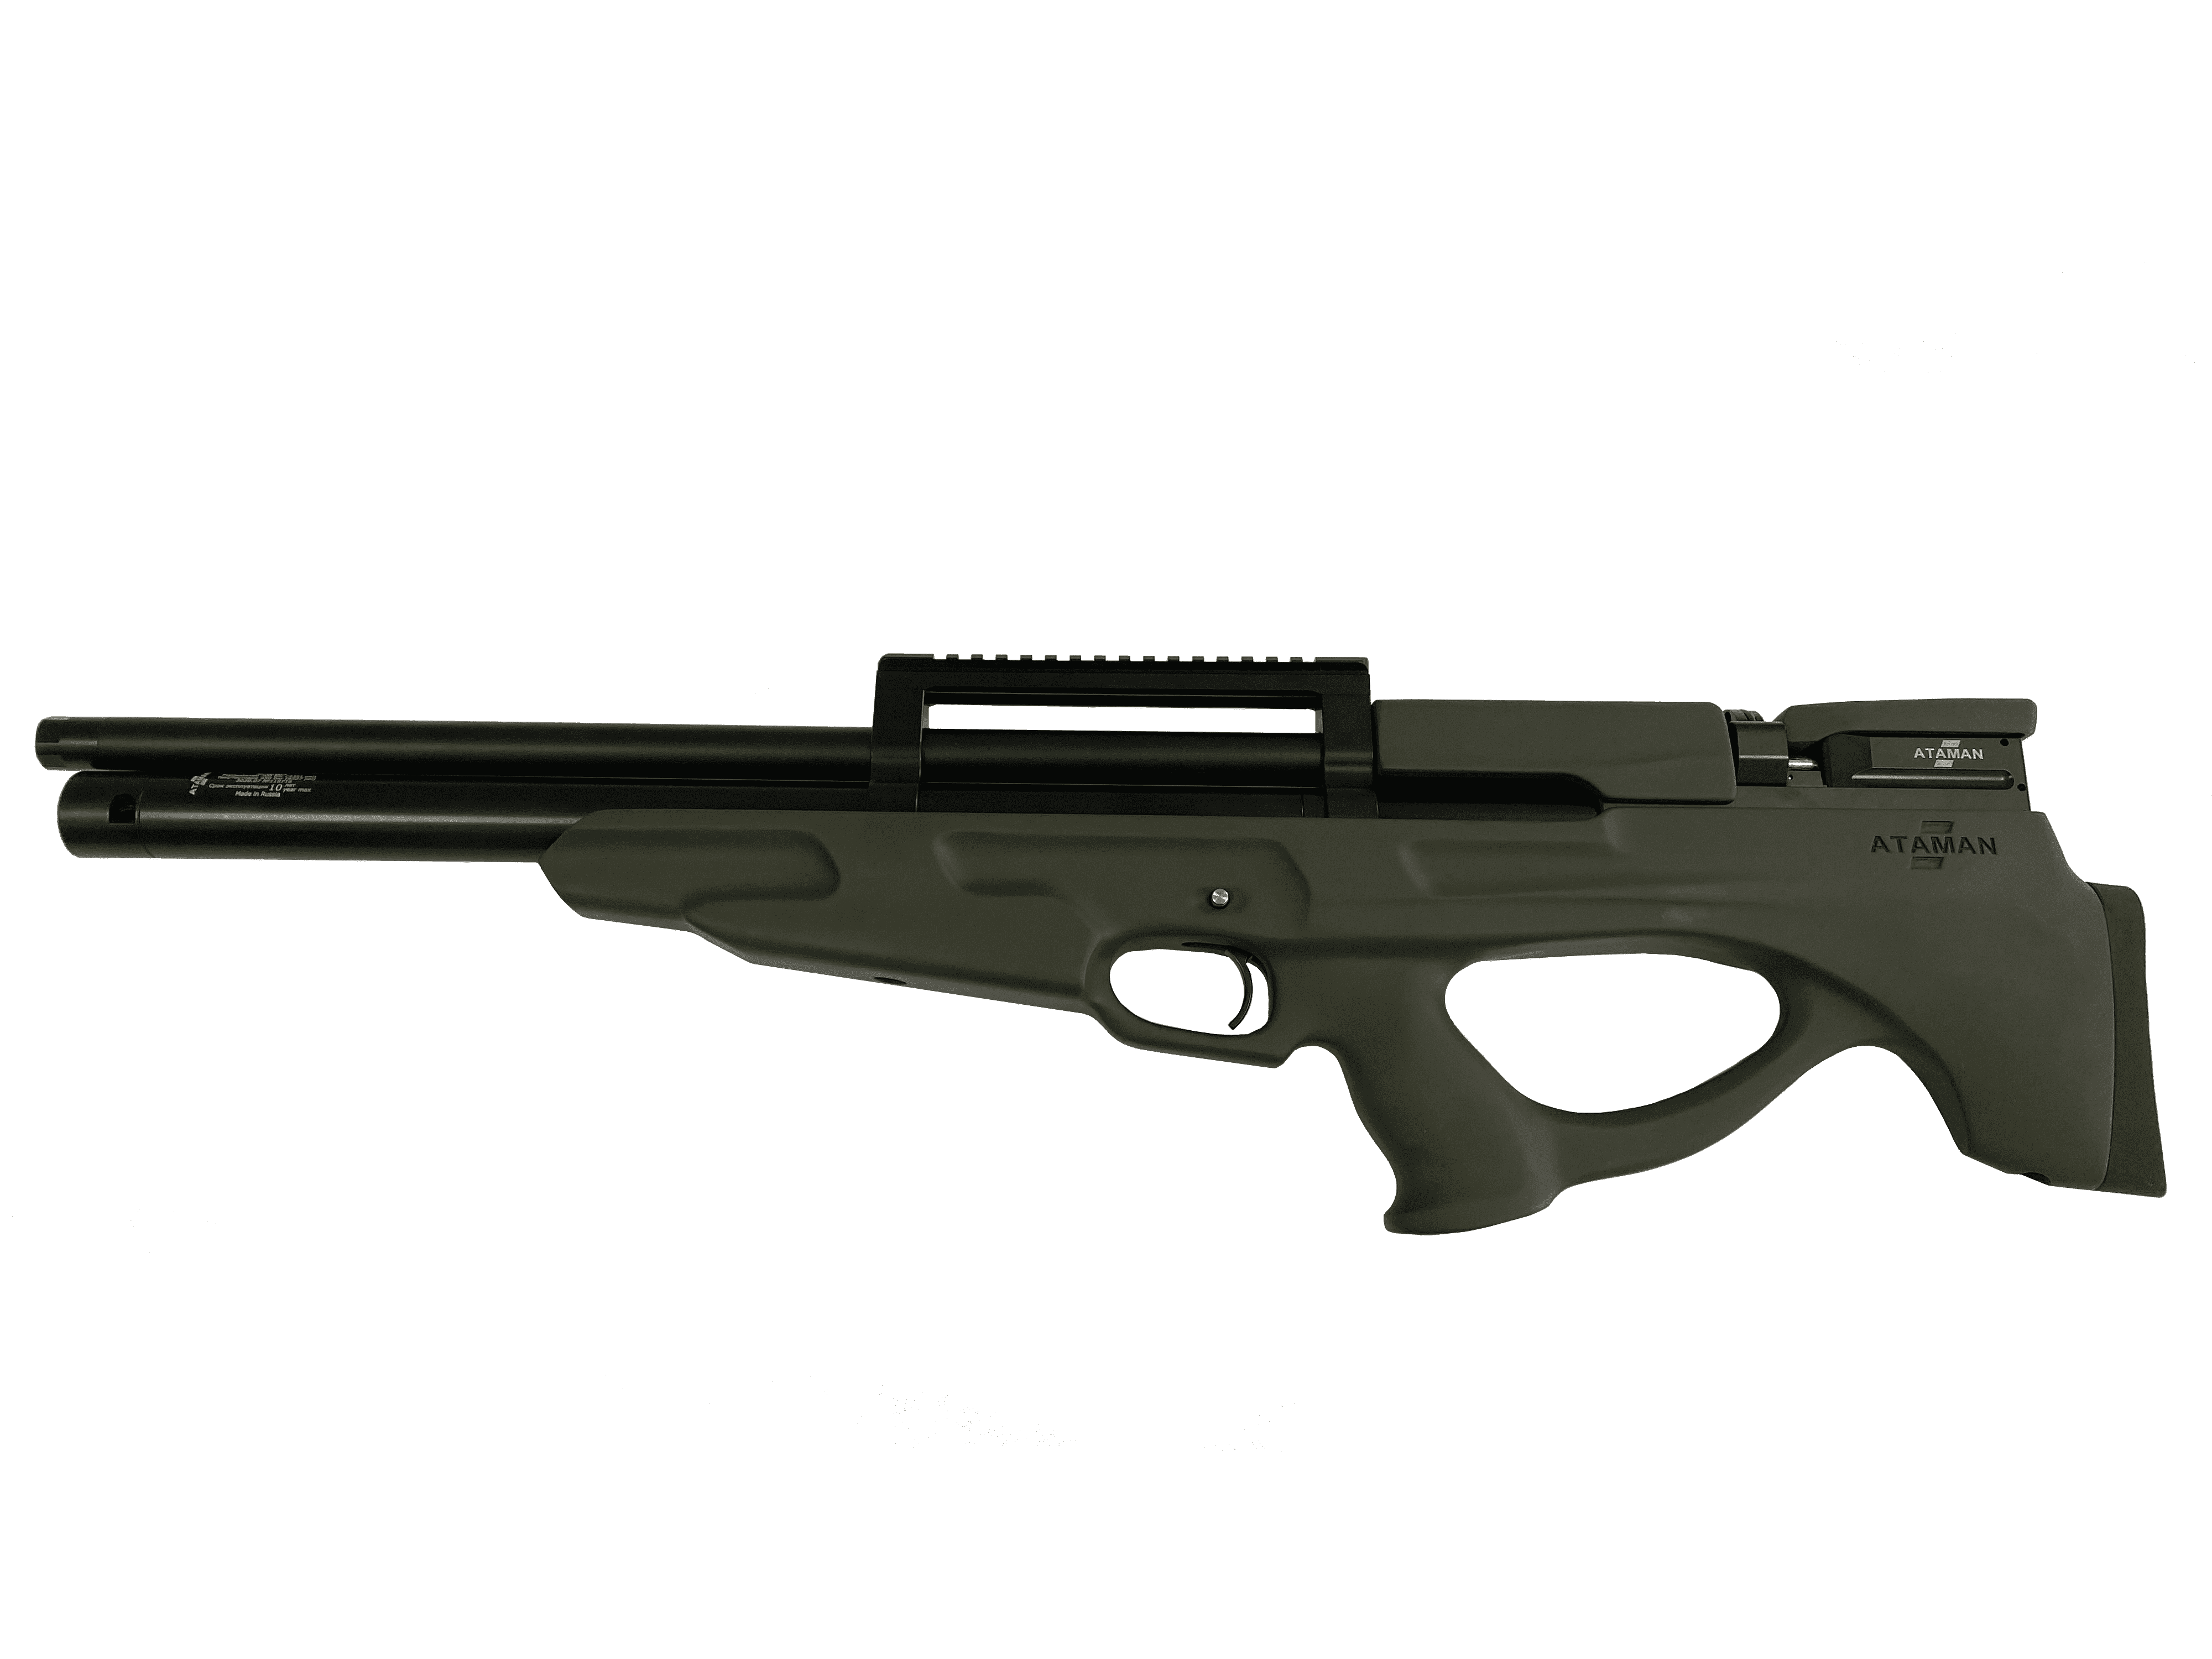 Пневматическая PCP винтовка ATAMAN M2R Булл-пап Тип 2, кал.7,62мм (Soft-Touch Olive)